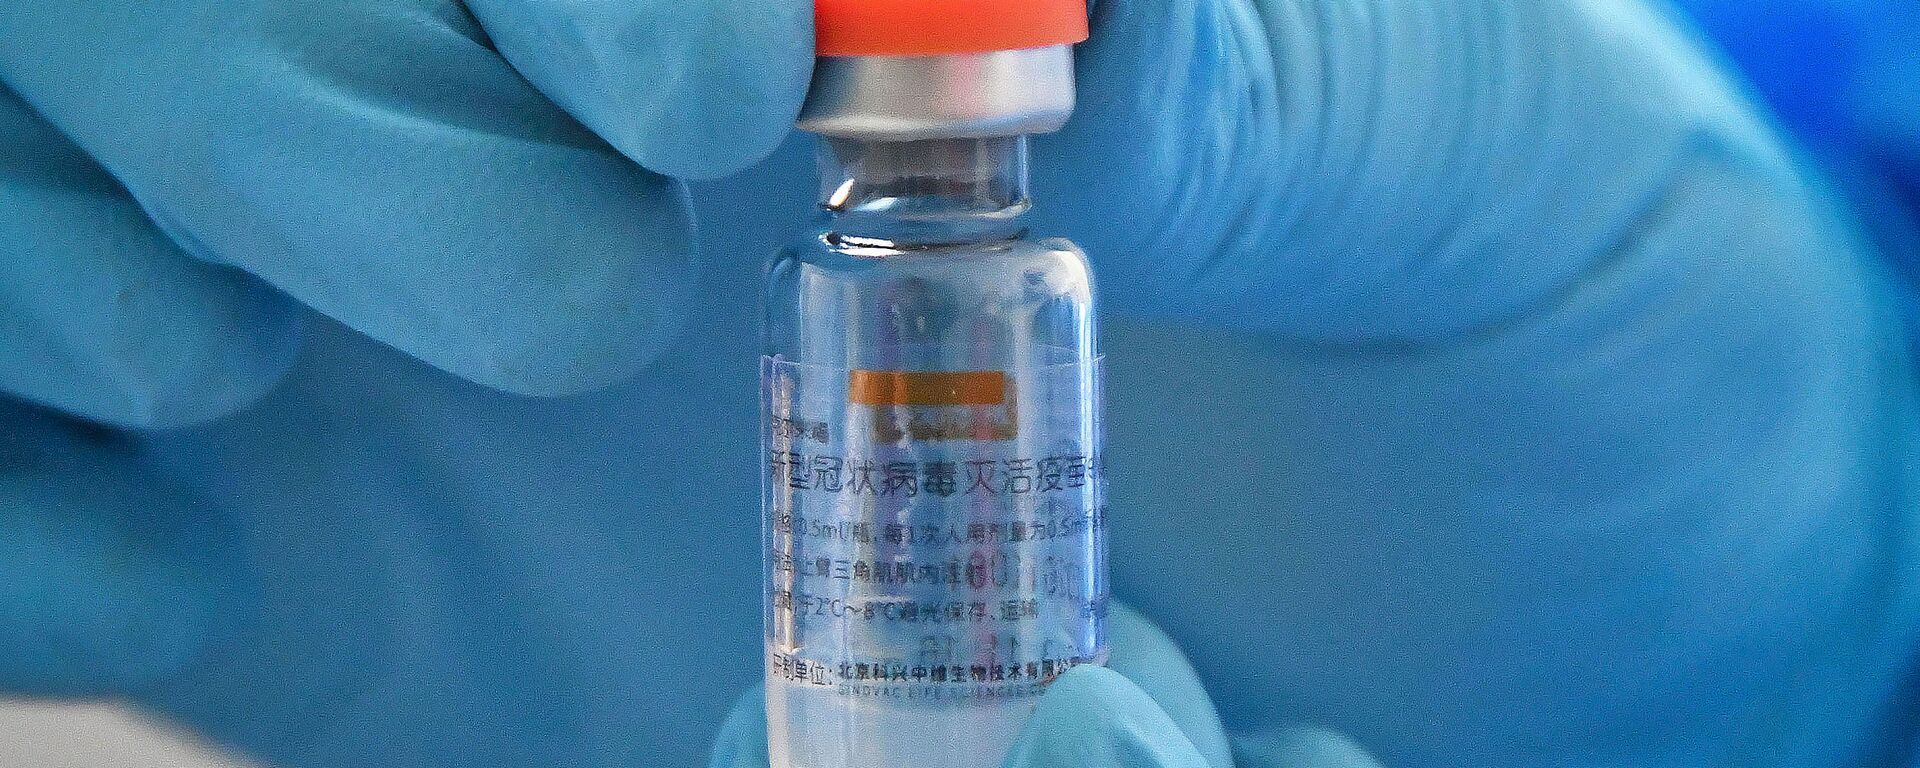 Vacuna contra el COVID-19 de Sinovac - Sputnik Mundo, 1920, 01.06.2021